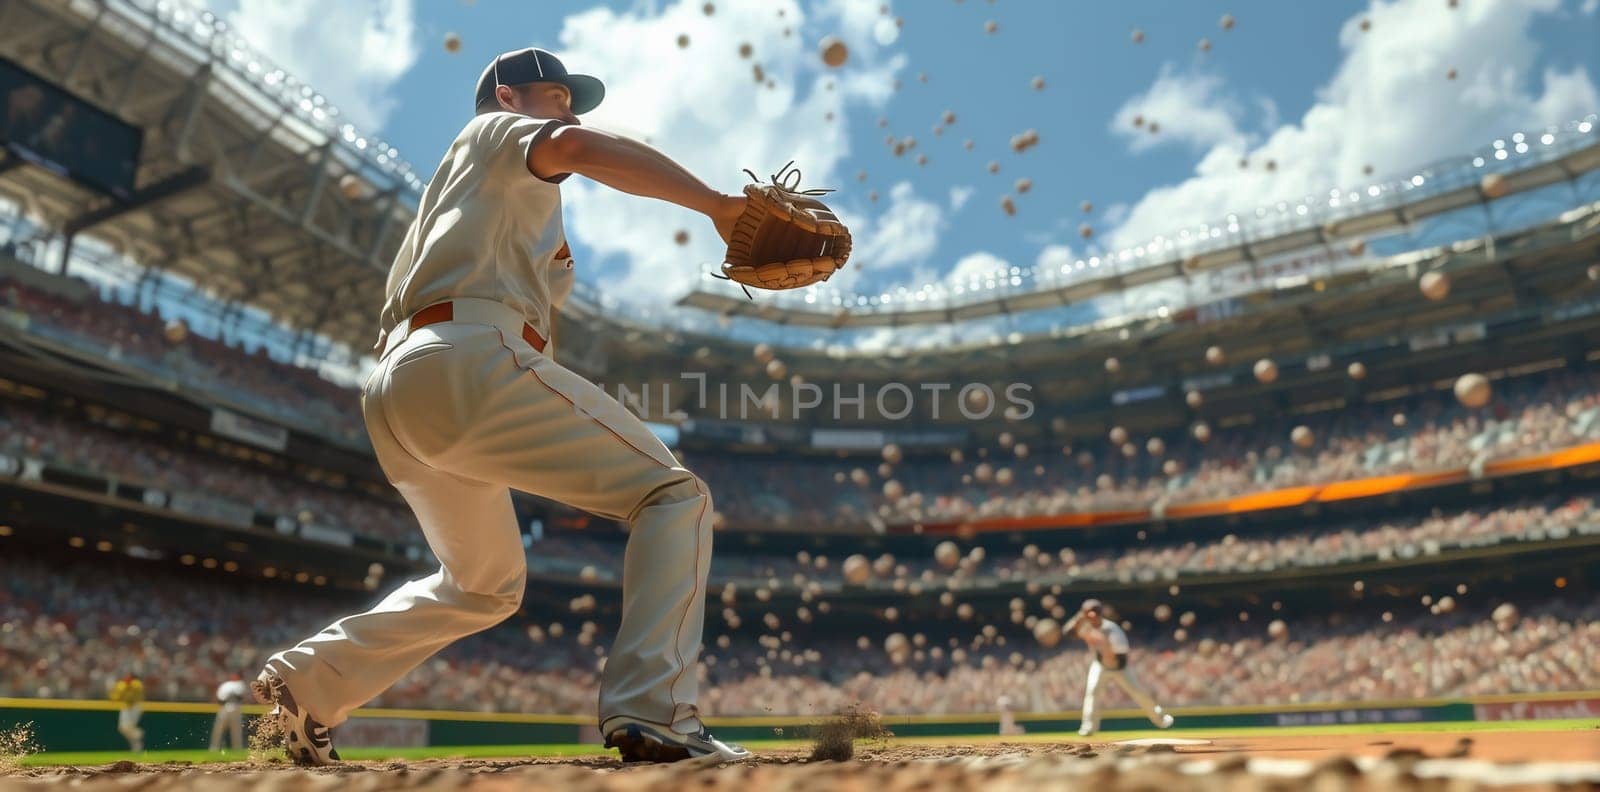 Baseball player throws the ball on professional baseball stadium by Andelov13